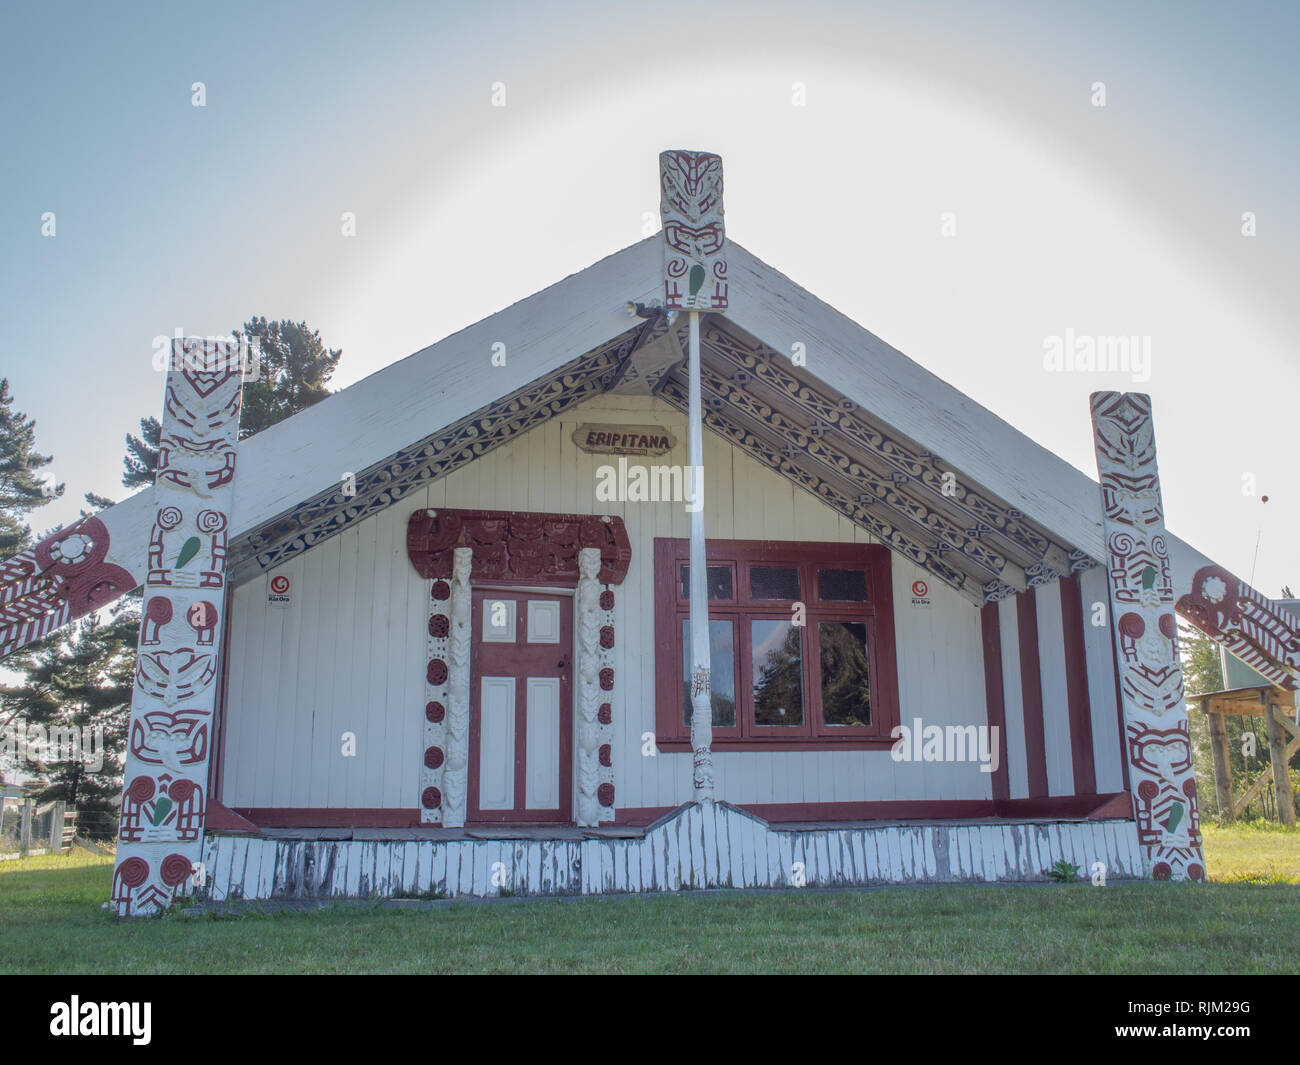 Carved house, Eripitana , Murumurunga marae, Te Whaiti, Te Urewera, North Island, New Zealand Stock Photo